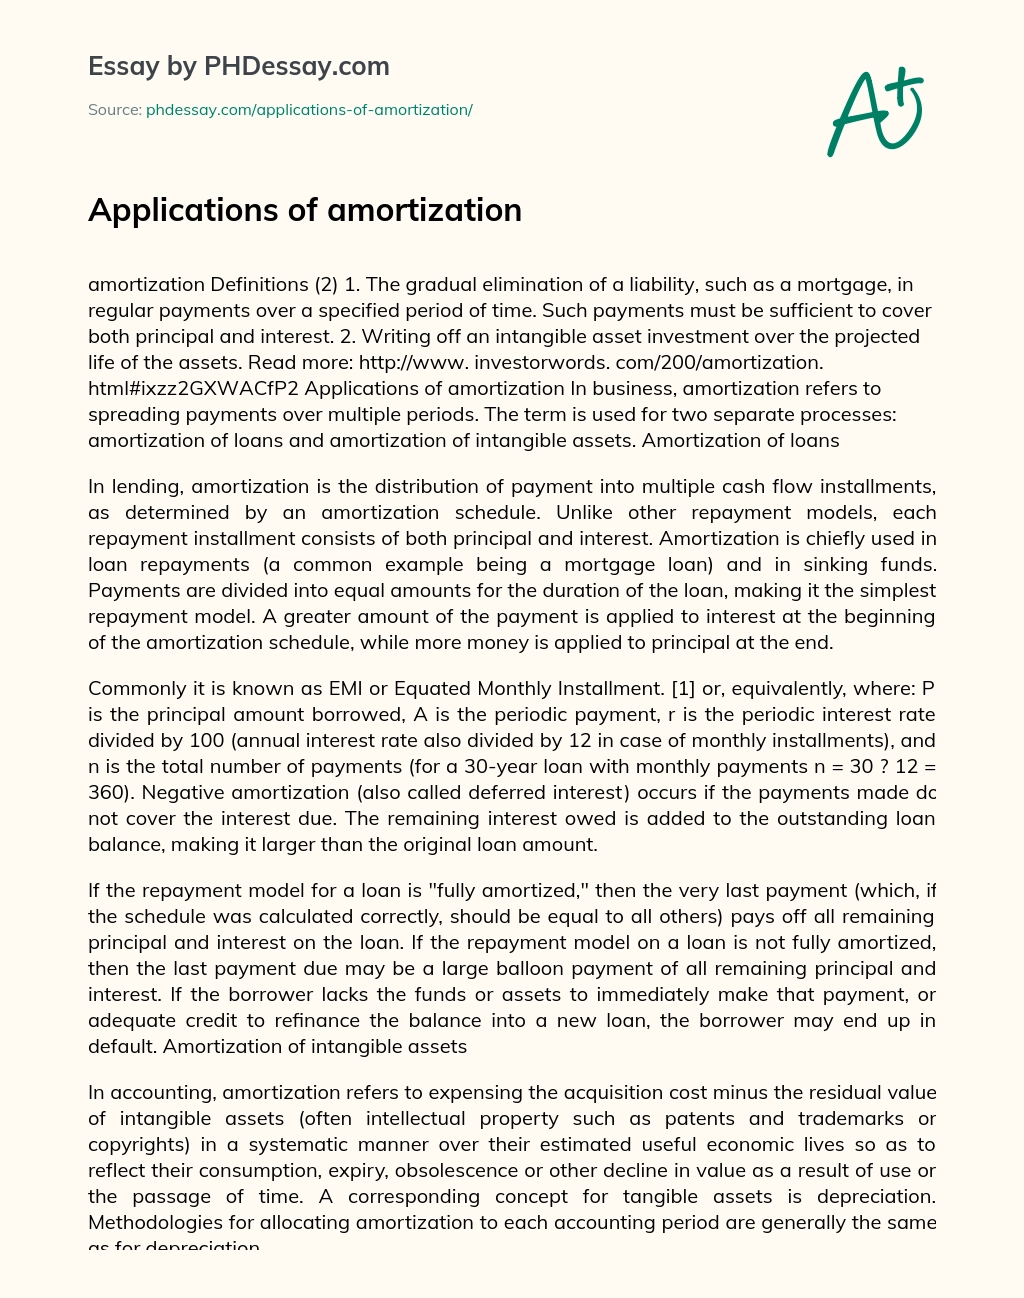 Applications of amortization essay